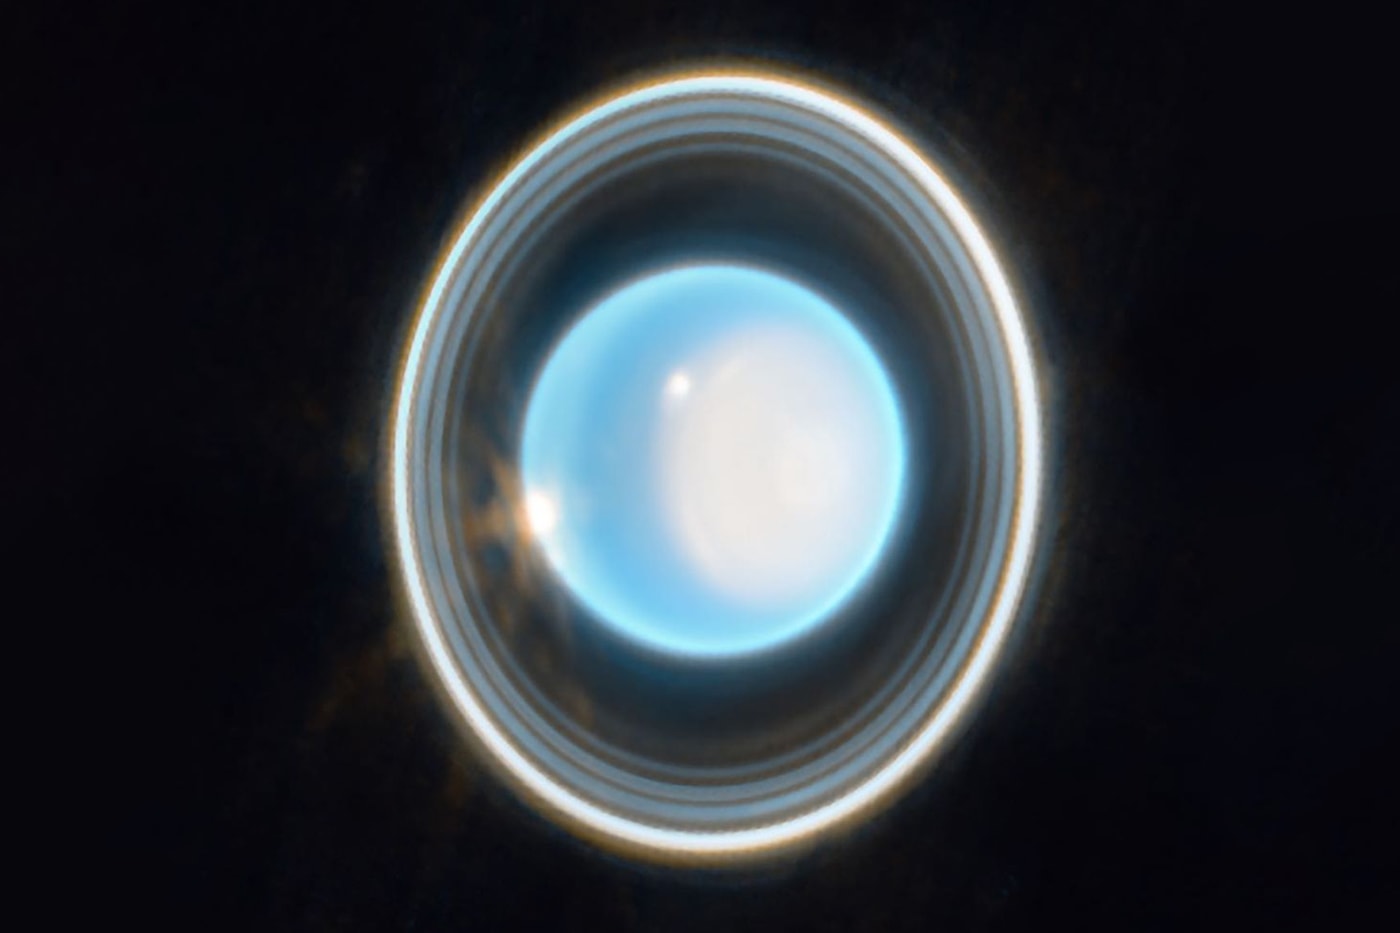 NASA James Webb Space Telescope Captures Detailed Image of Uranus rings photos ice giant planet info